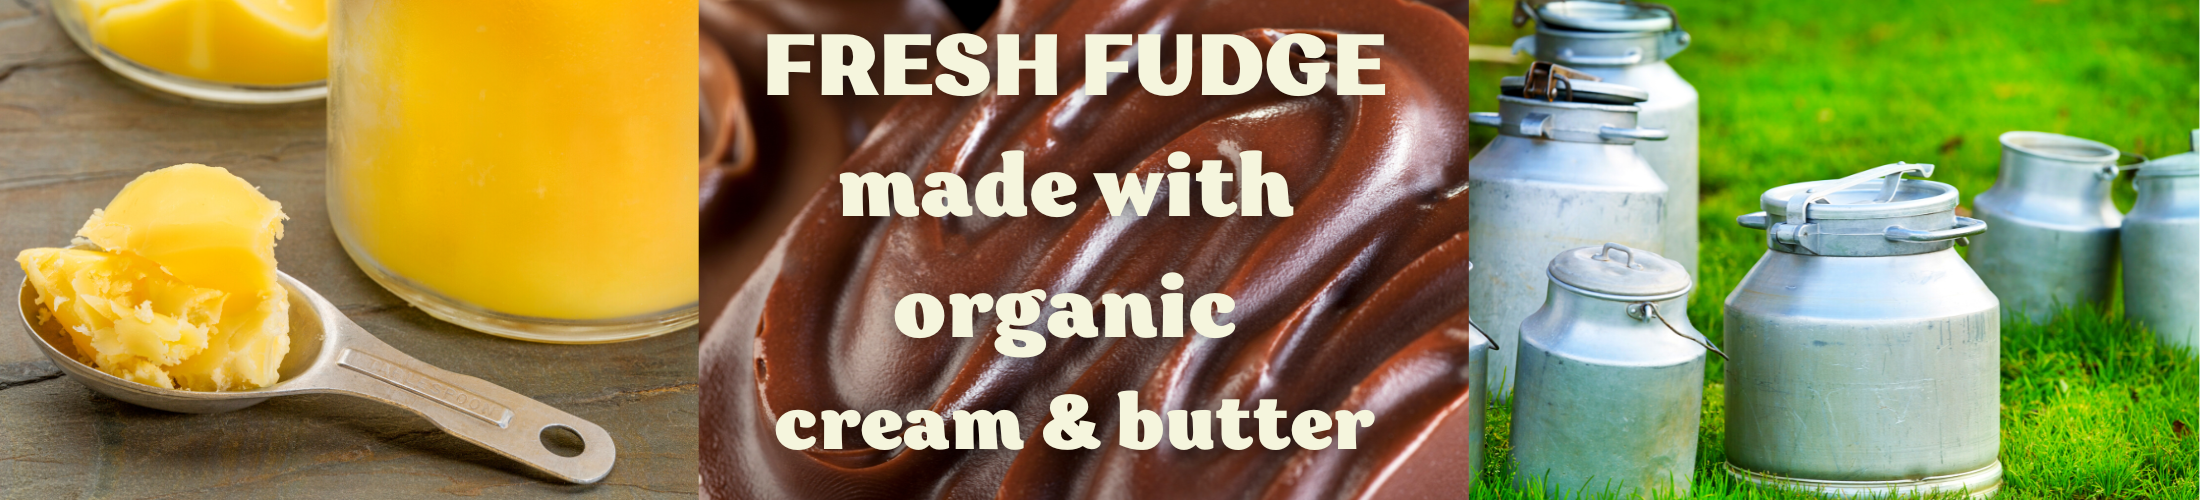 Fresh Fudge made with organic cream & butter